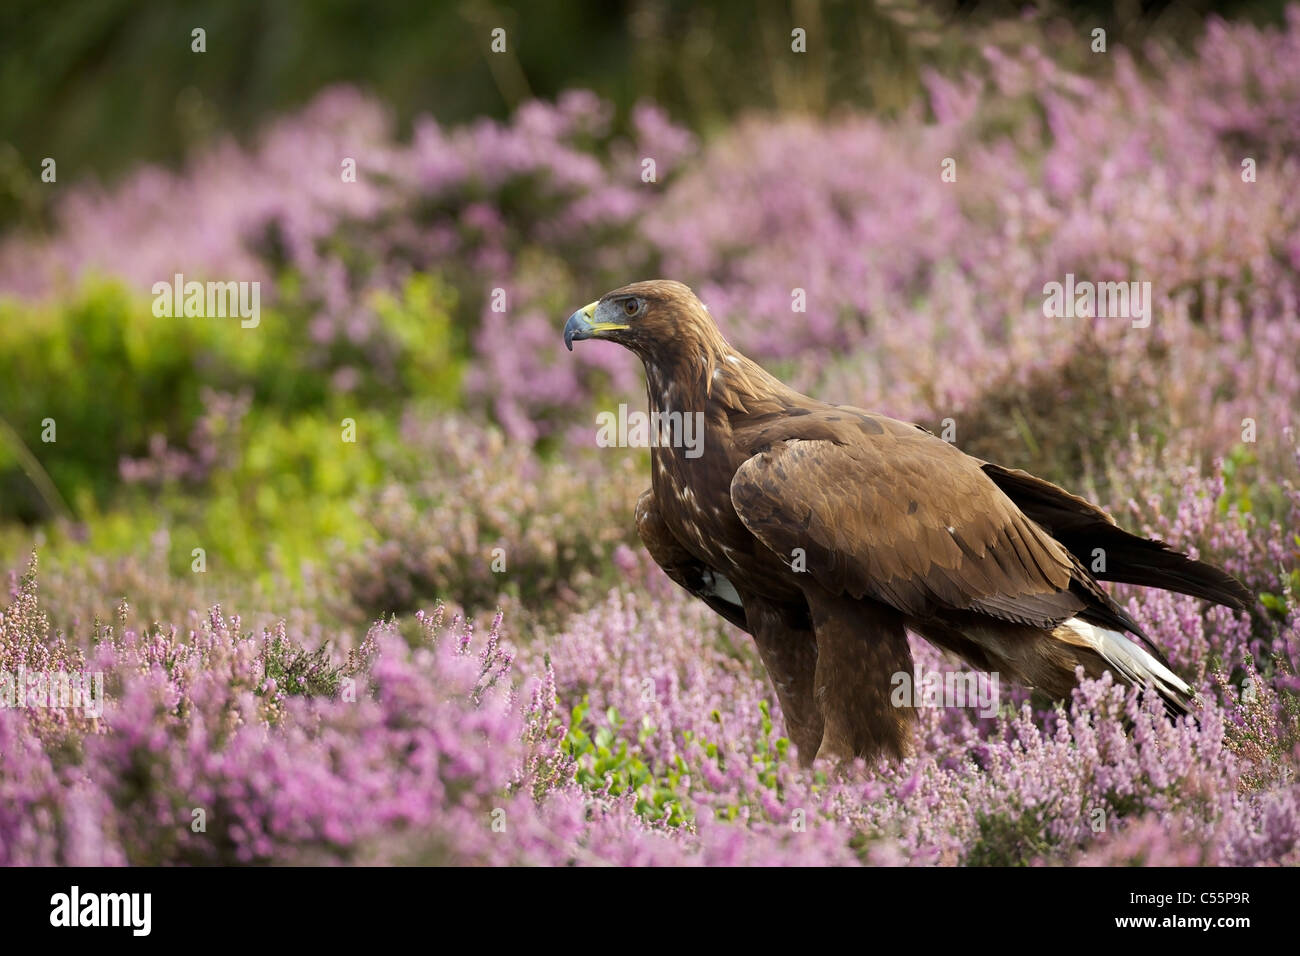 Golden eagle (Aquila chrysaetos) in a field, Loughborough, England Stock Photo